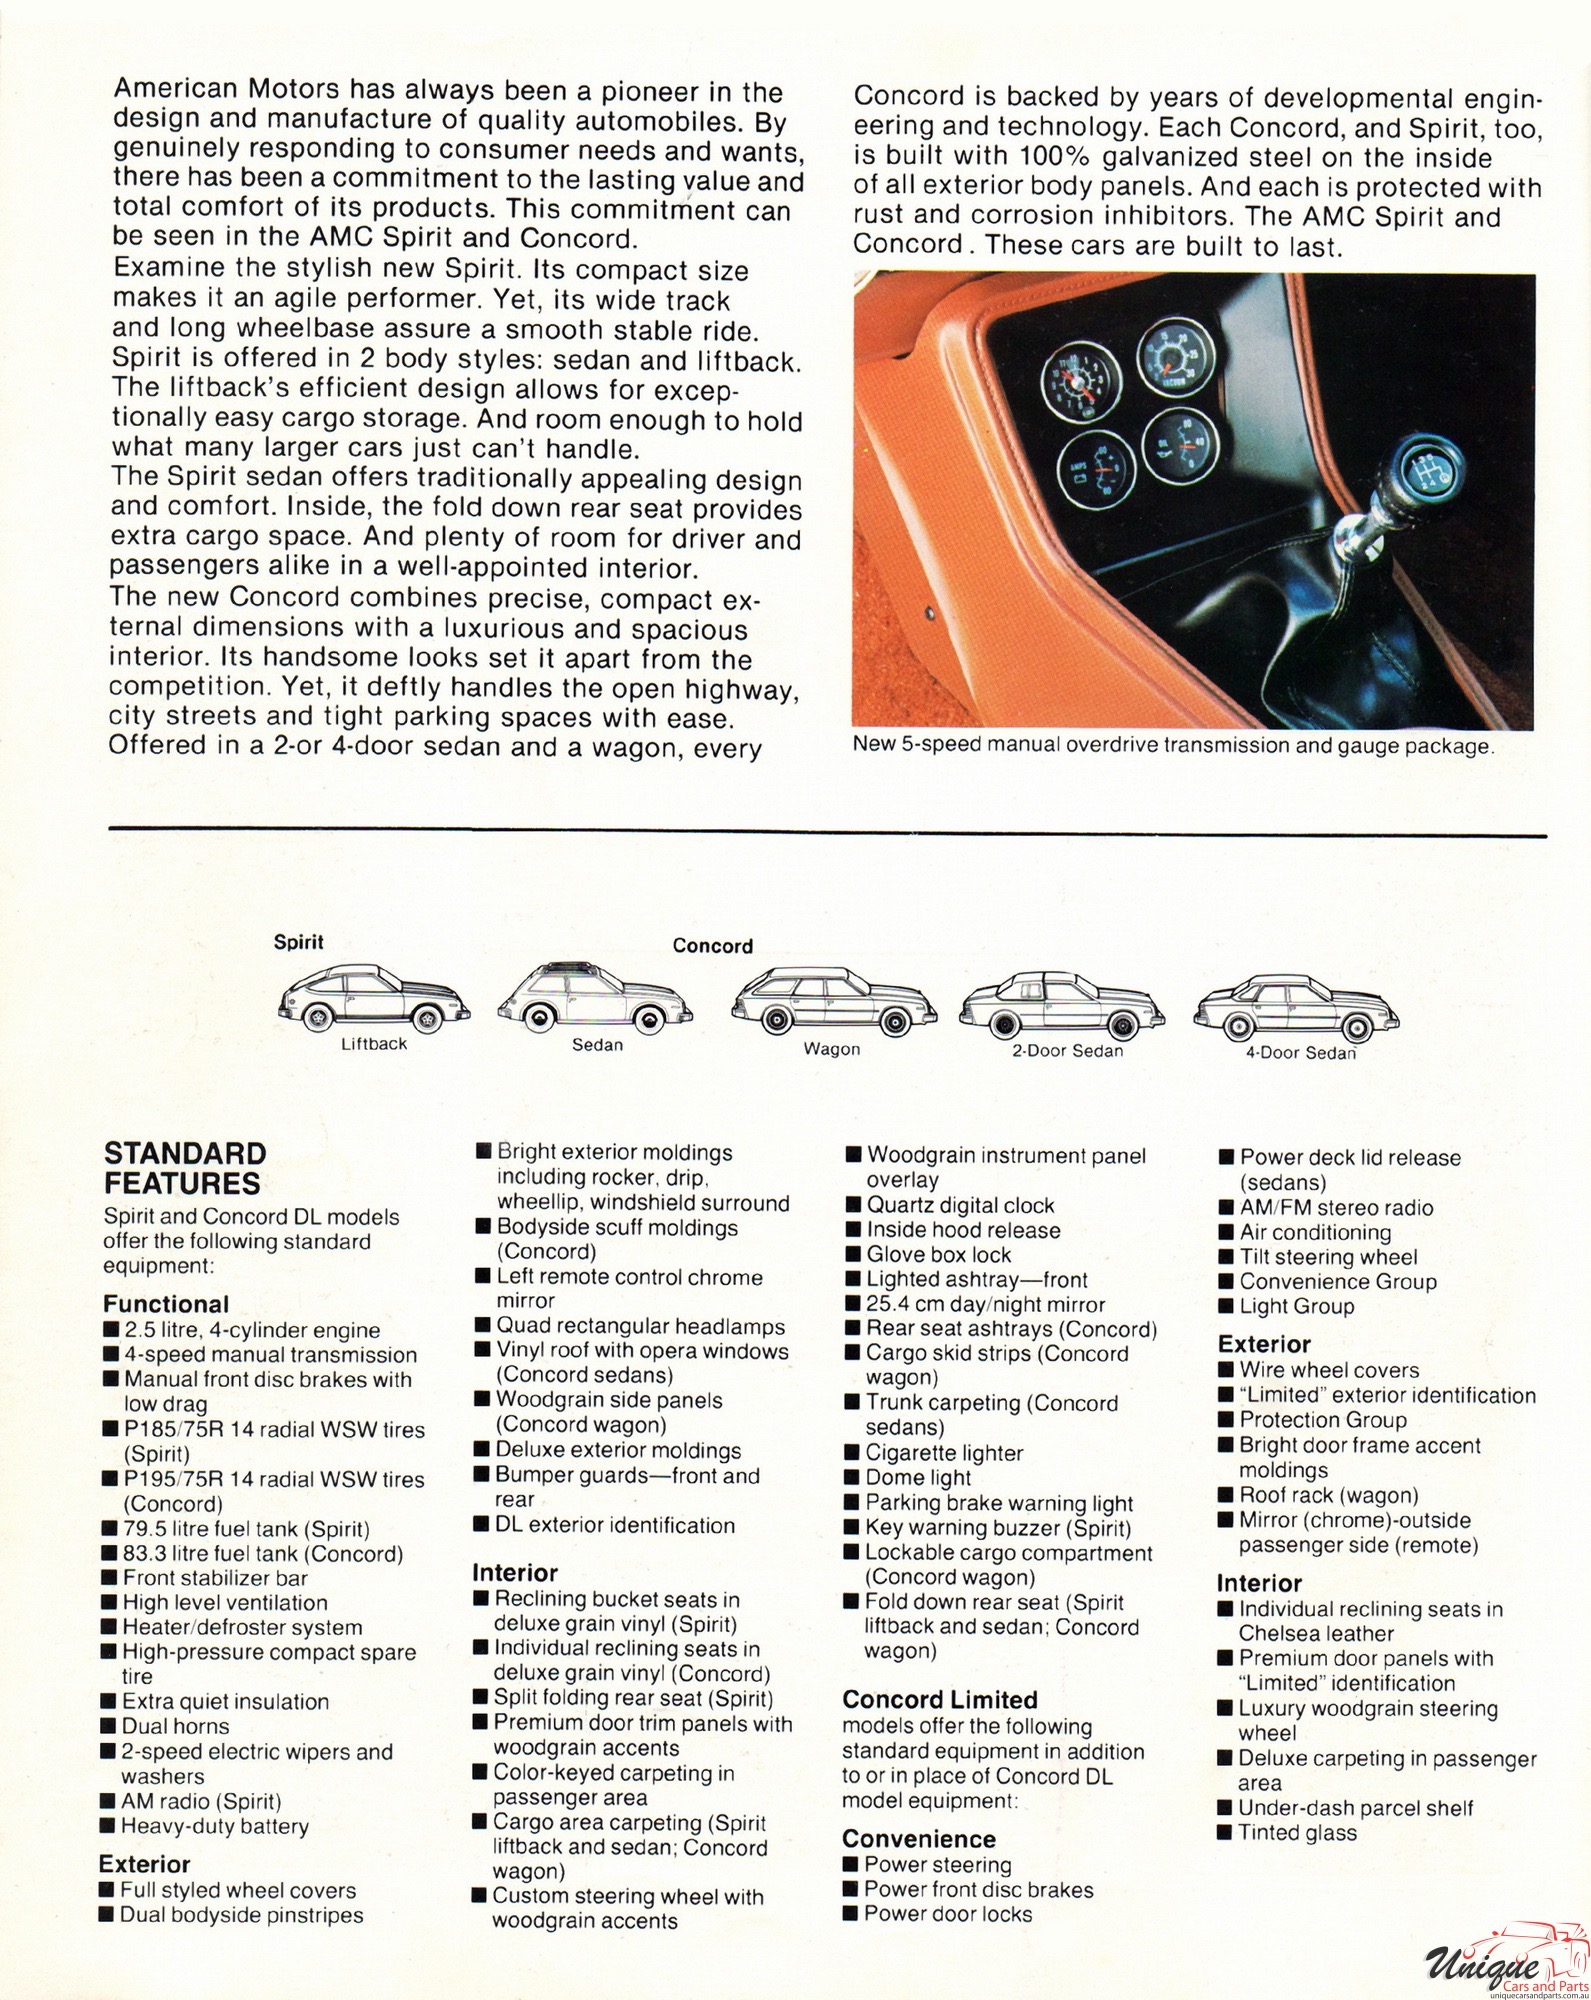 1981 AMC Spirit Concord Export Brochure Page 1